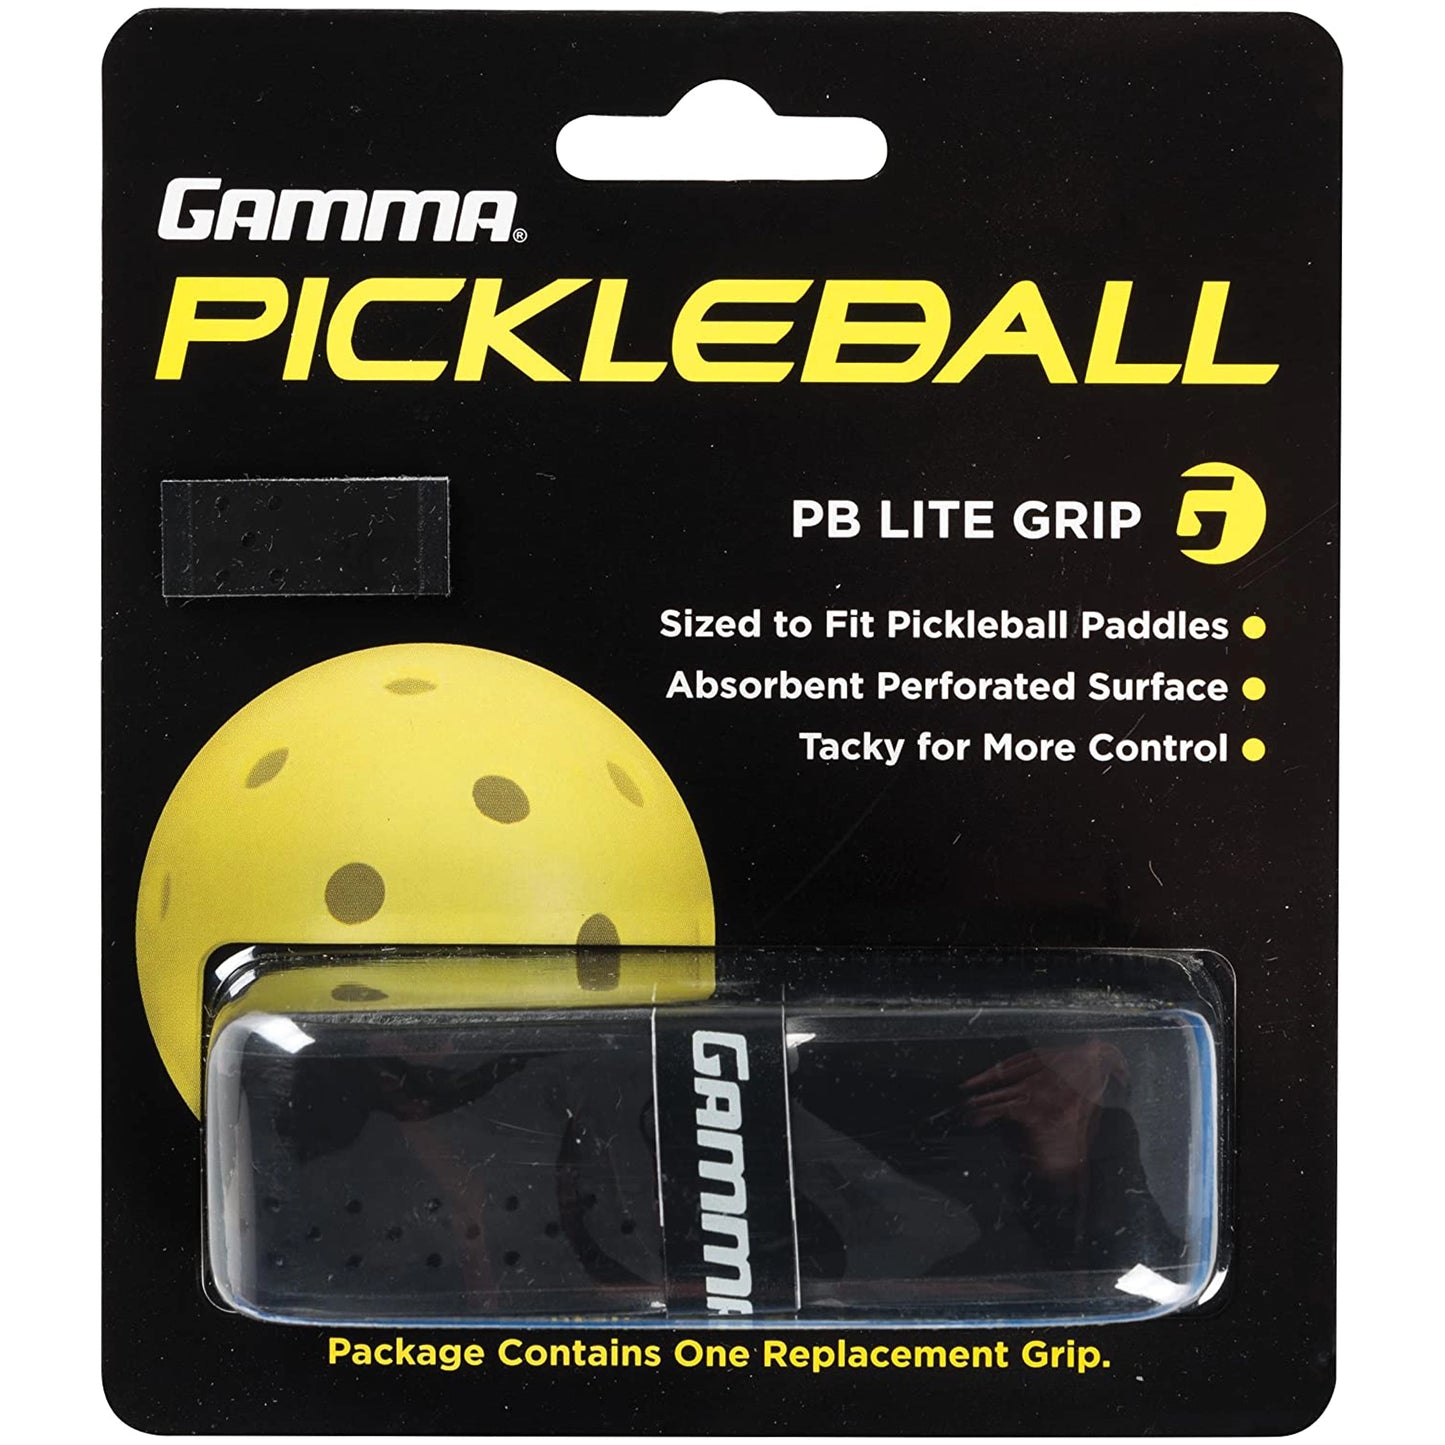 Gamma Pickleball Lite Replacement Grip - Black